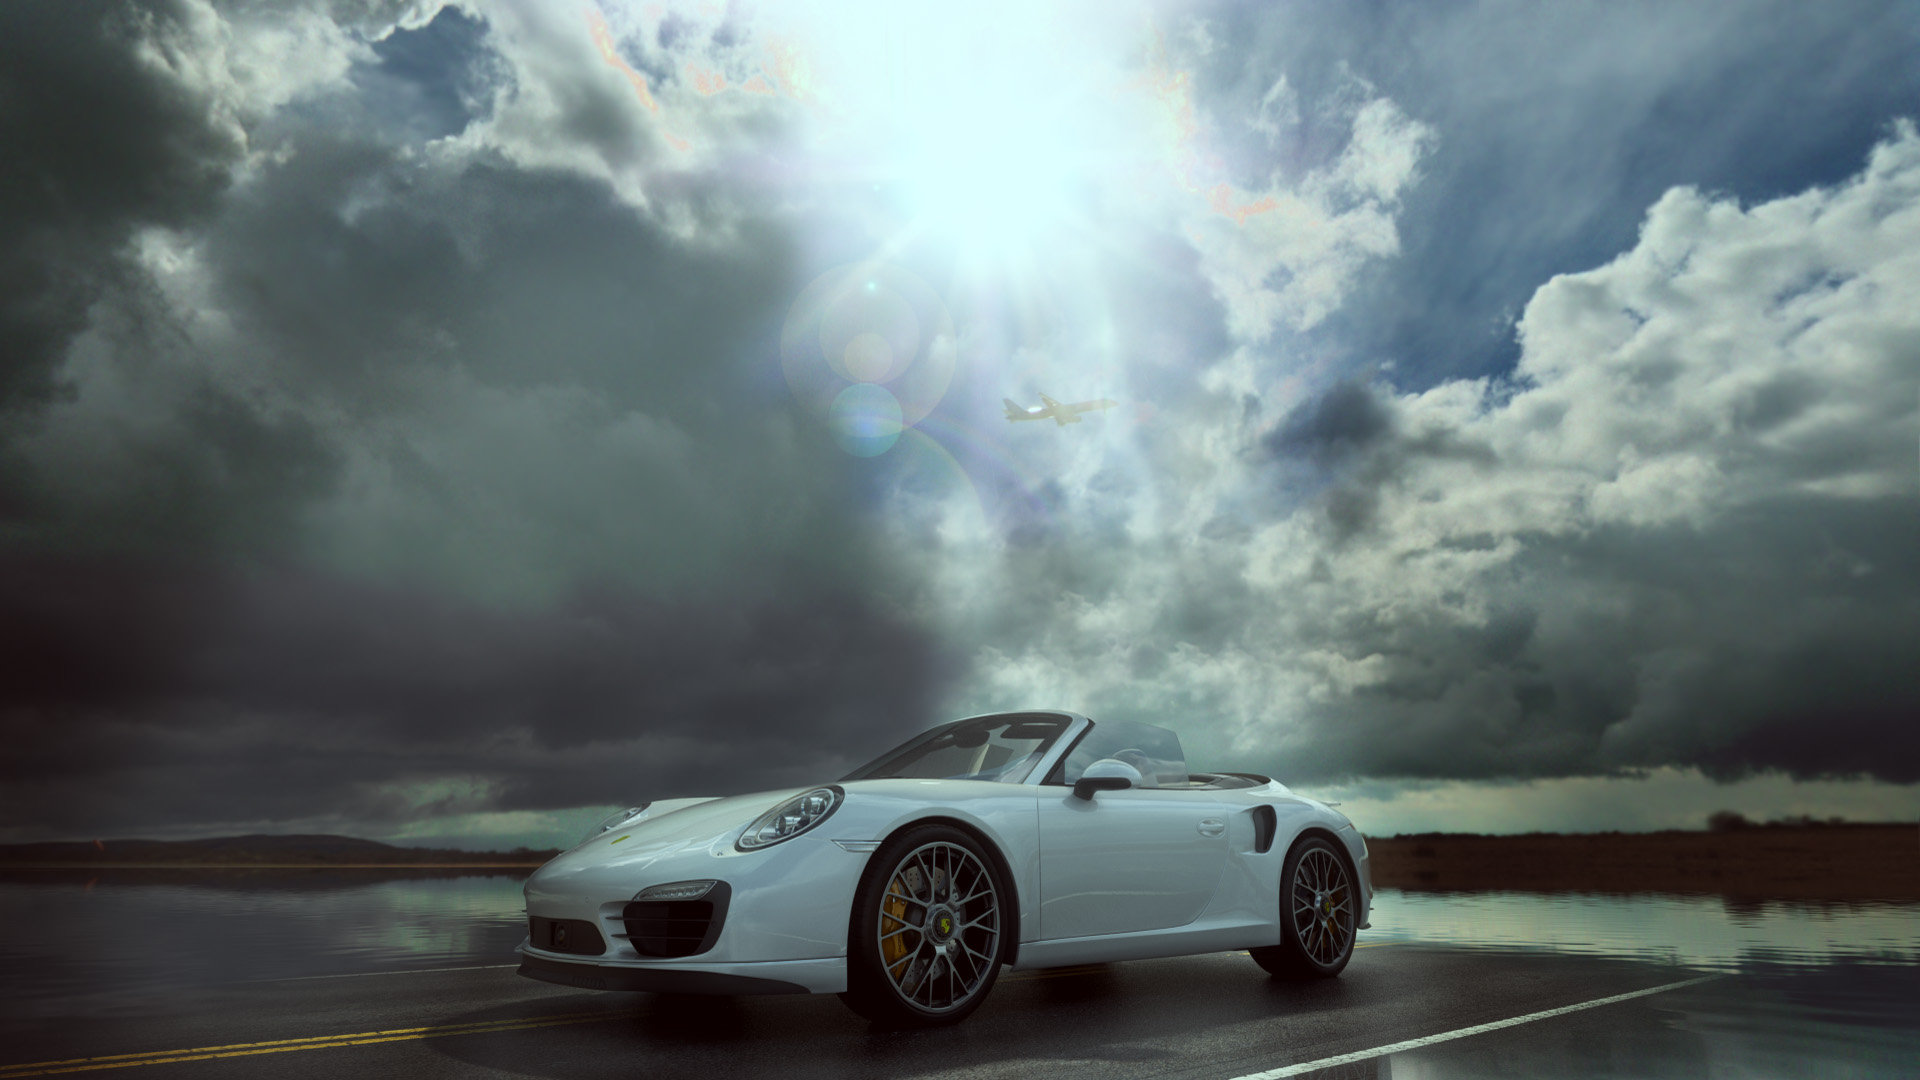 Porsche Turbo Cabriolet 2014 after rain scene 3d art